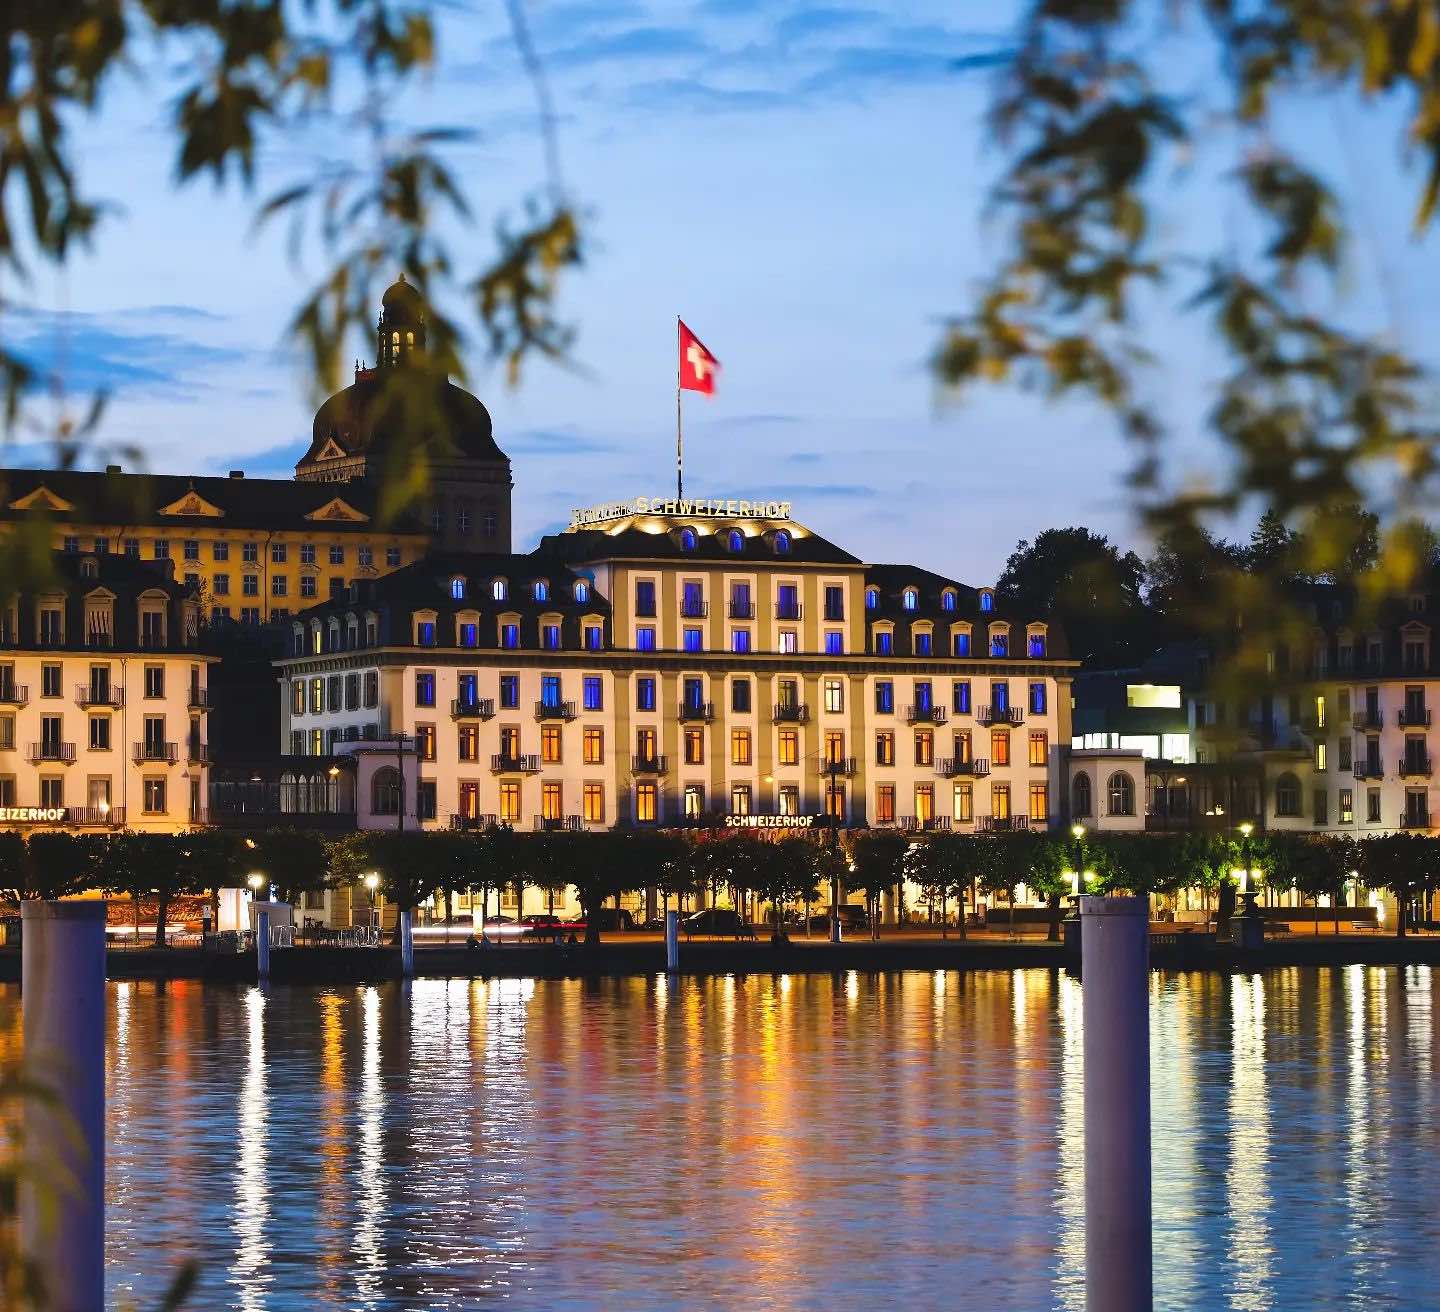 Hotel Schweizerhof Luzern lit up at night with body of water in foreground